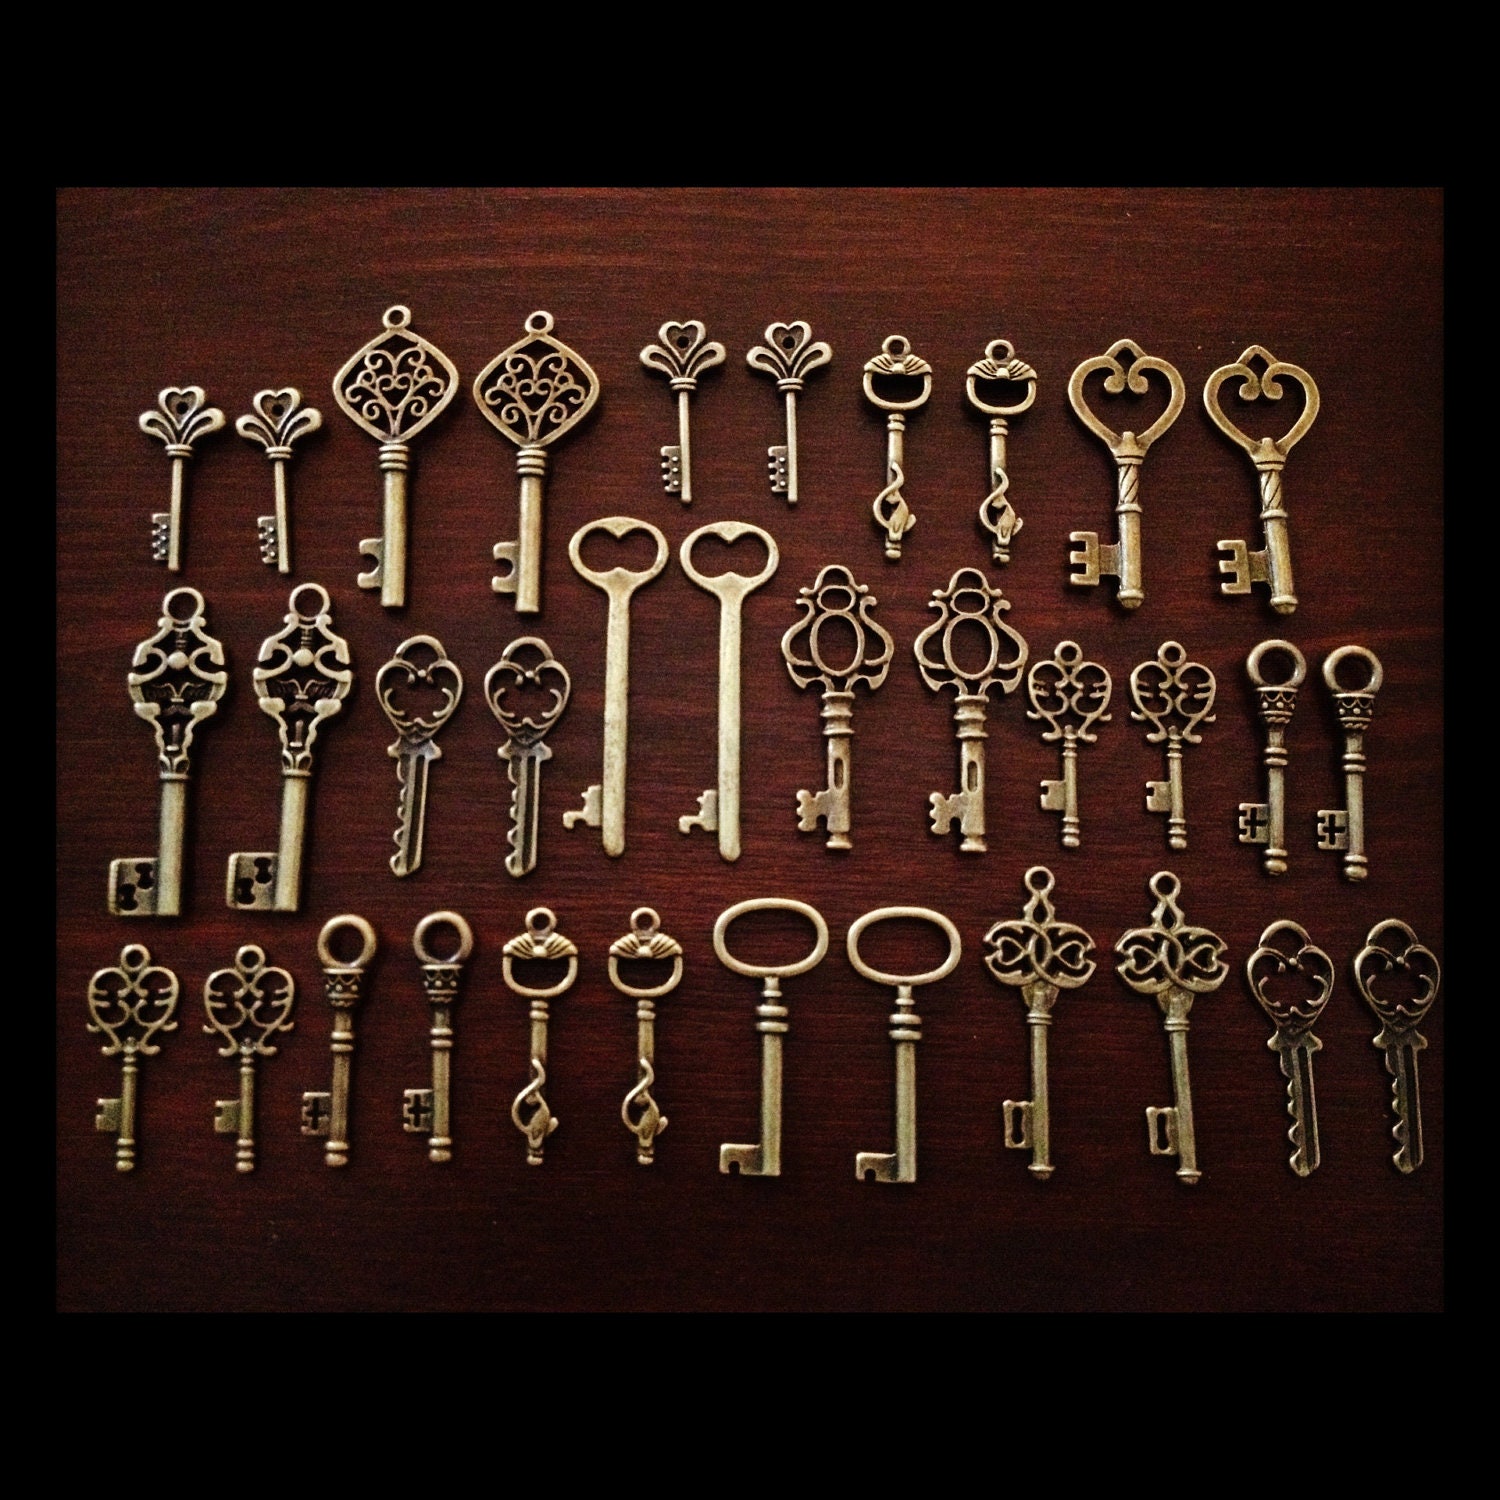 Keys to the Kingdom - Skeleton Keys - 36 x Vintage Keys Antique Bronze Brass Skeleton Key Skeleton Keys Set